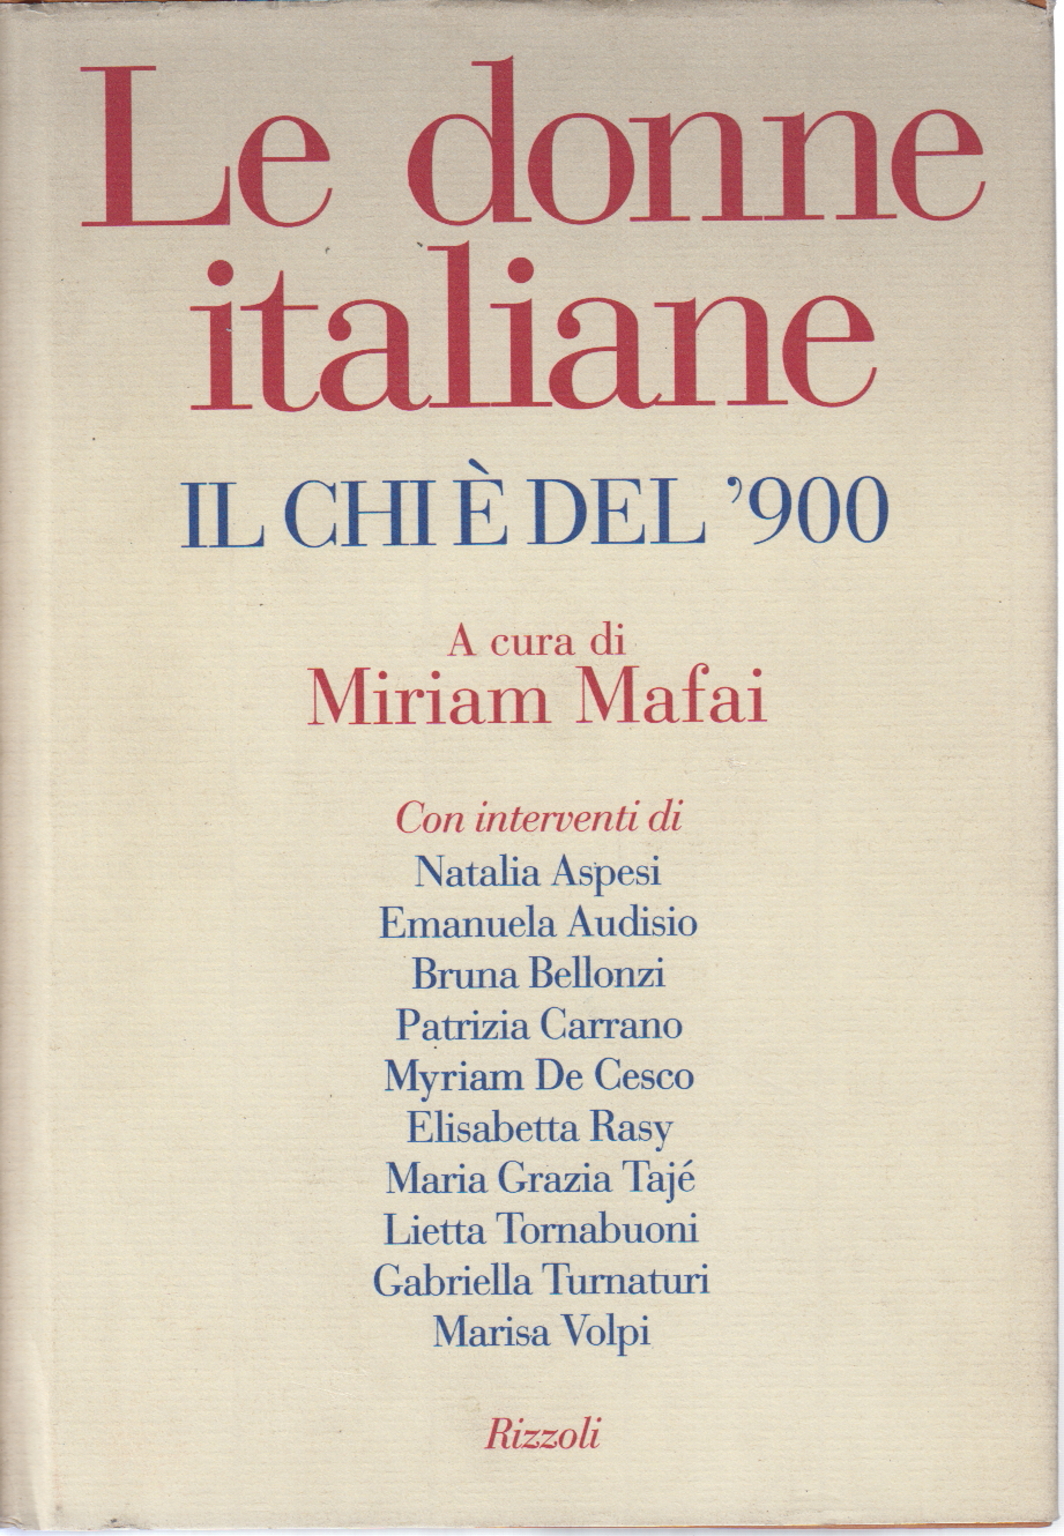 Le donne italiane, Miriam Mafai